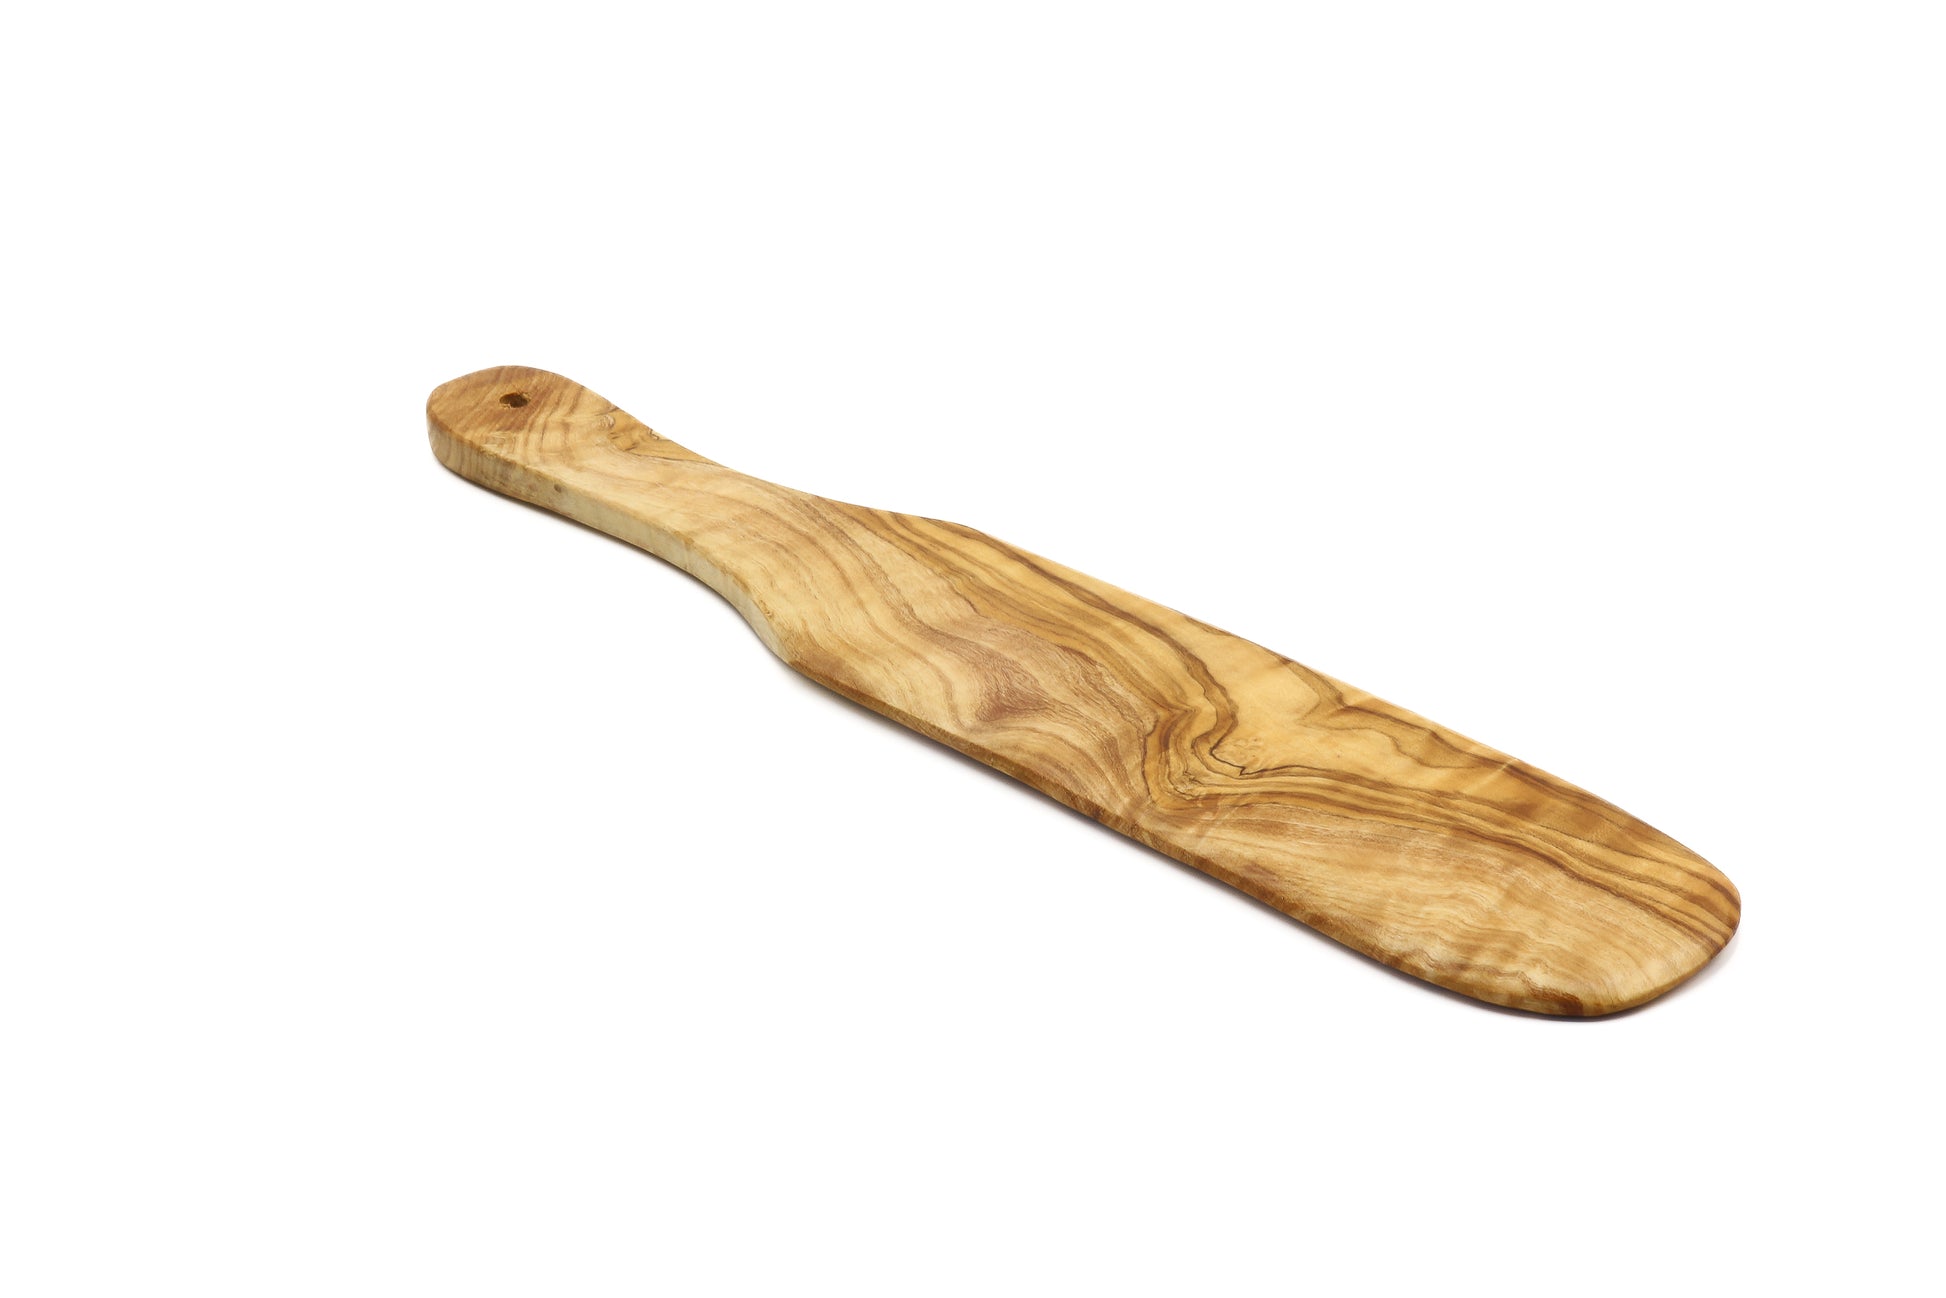 Eco-friendly long spatula for flipping breakfast delights